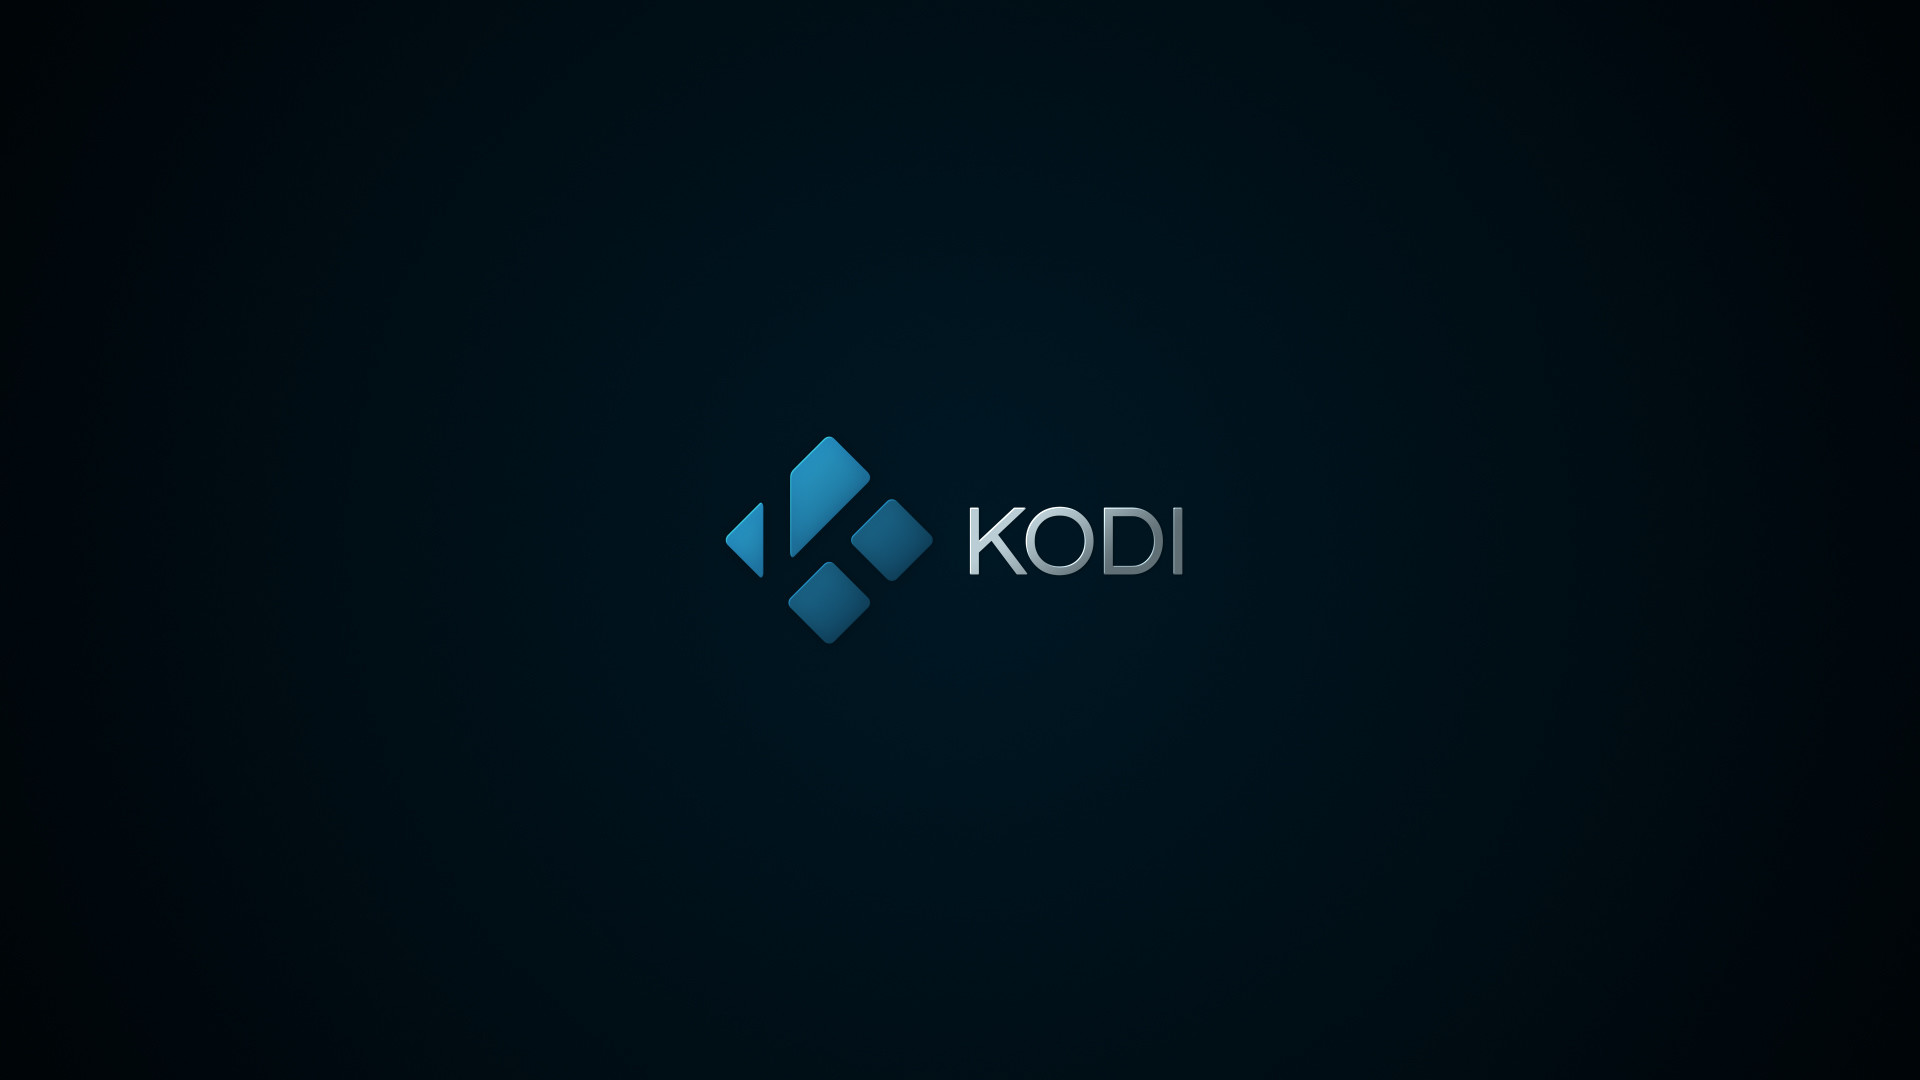 Kodi Background 1080p Wallpaper Image